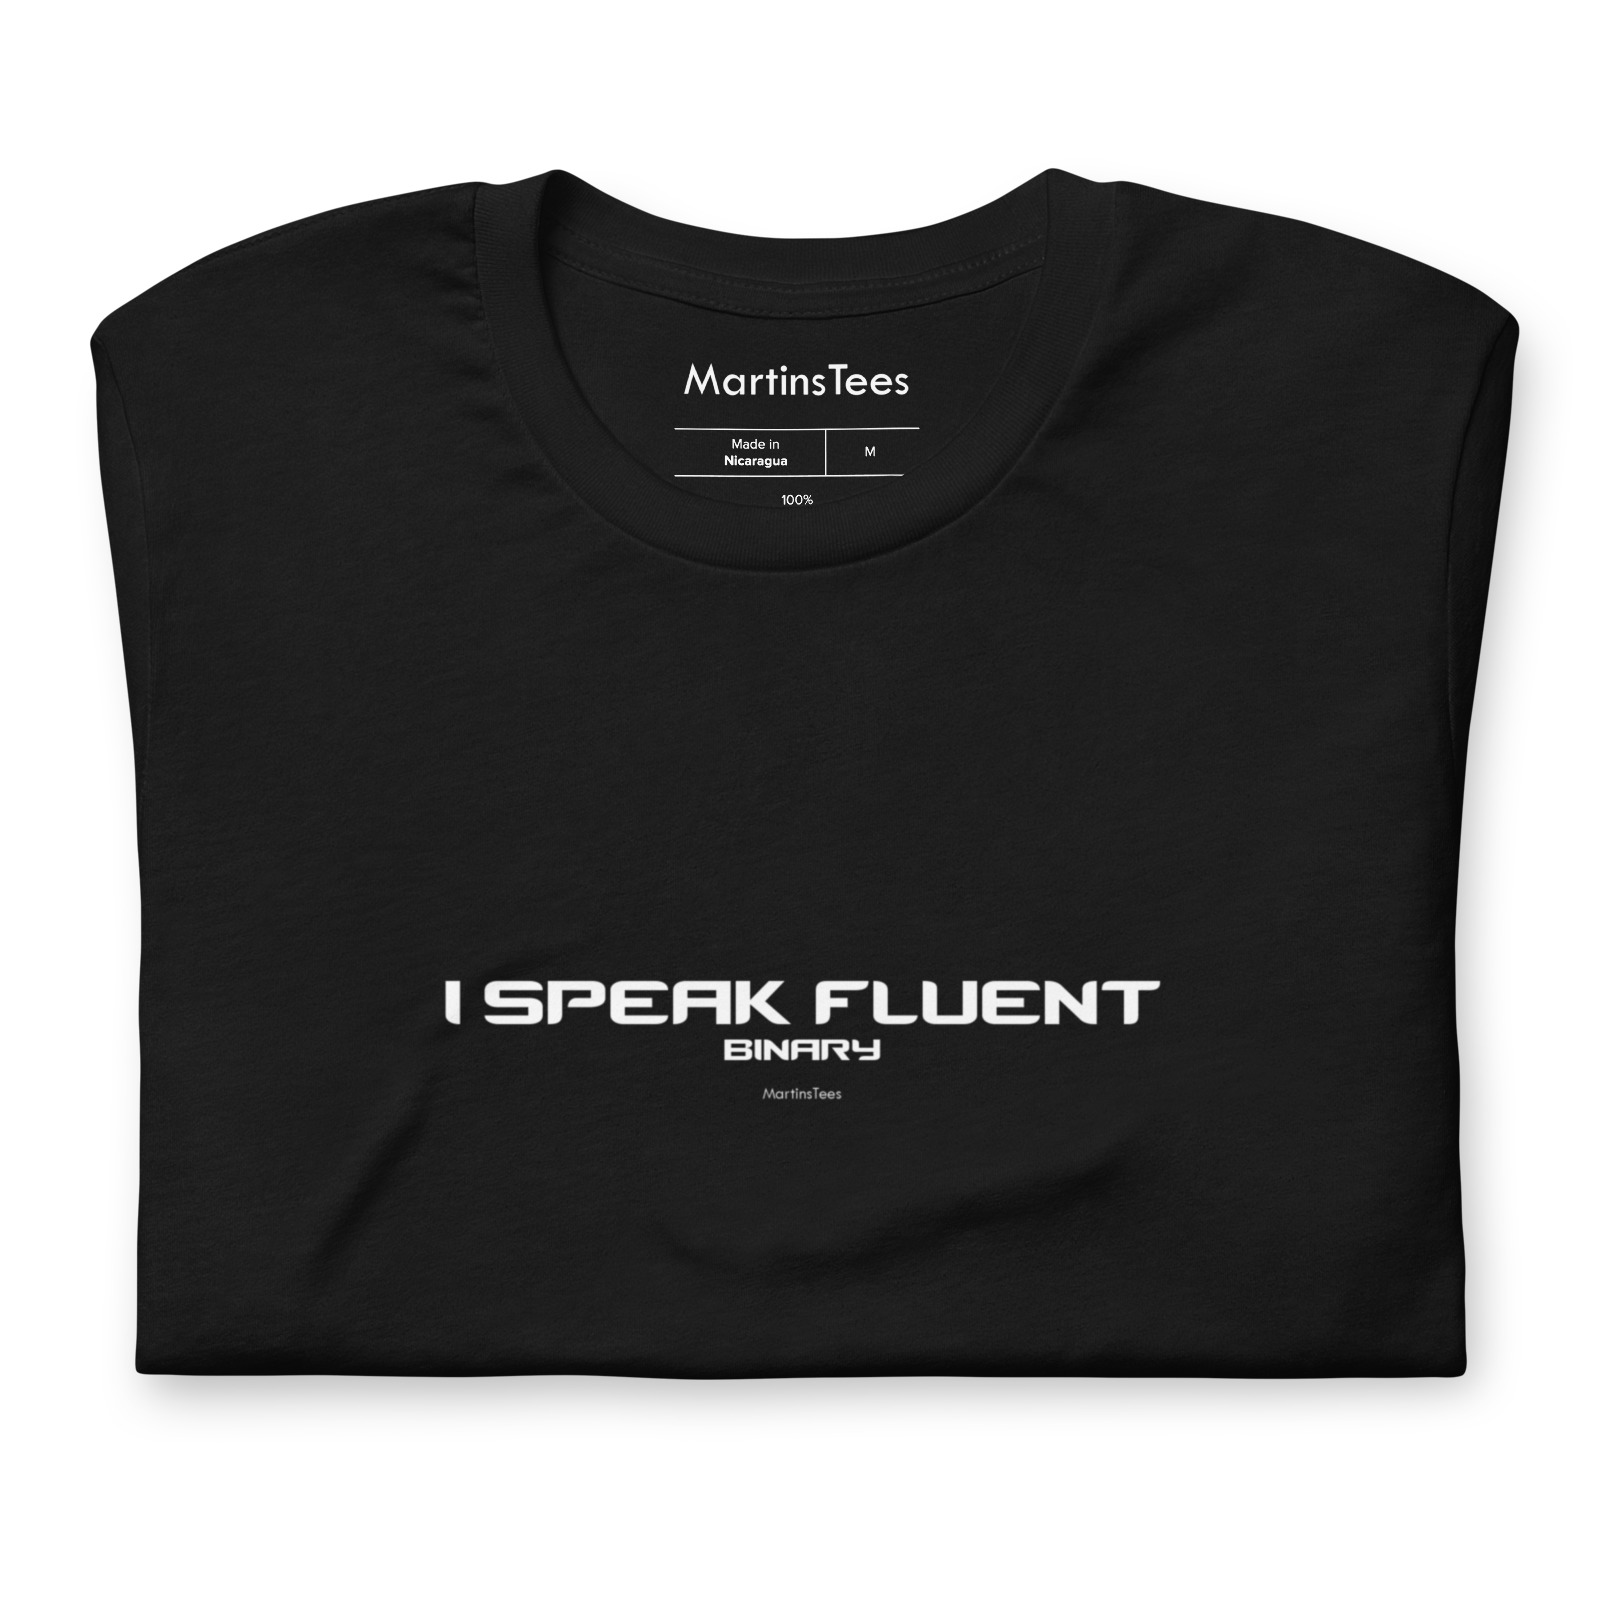 T-shirt: I SPEAK FLUENT - BINARY